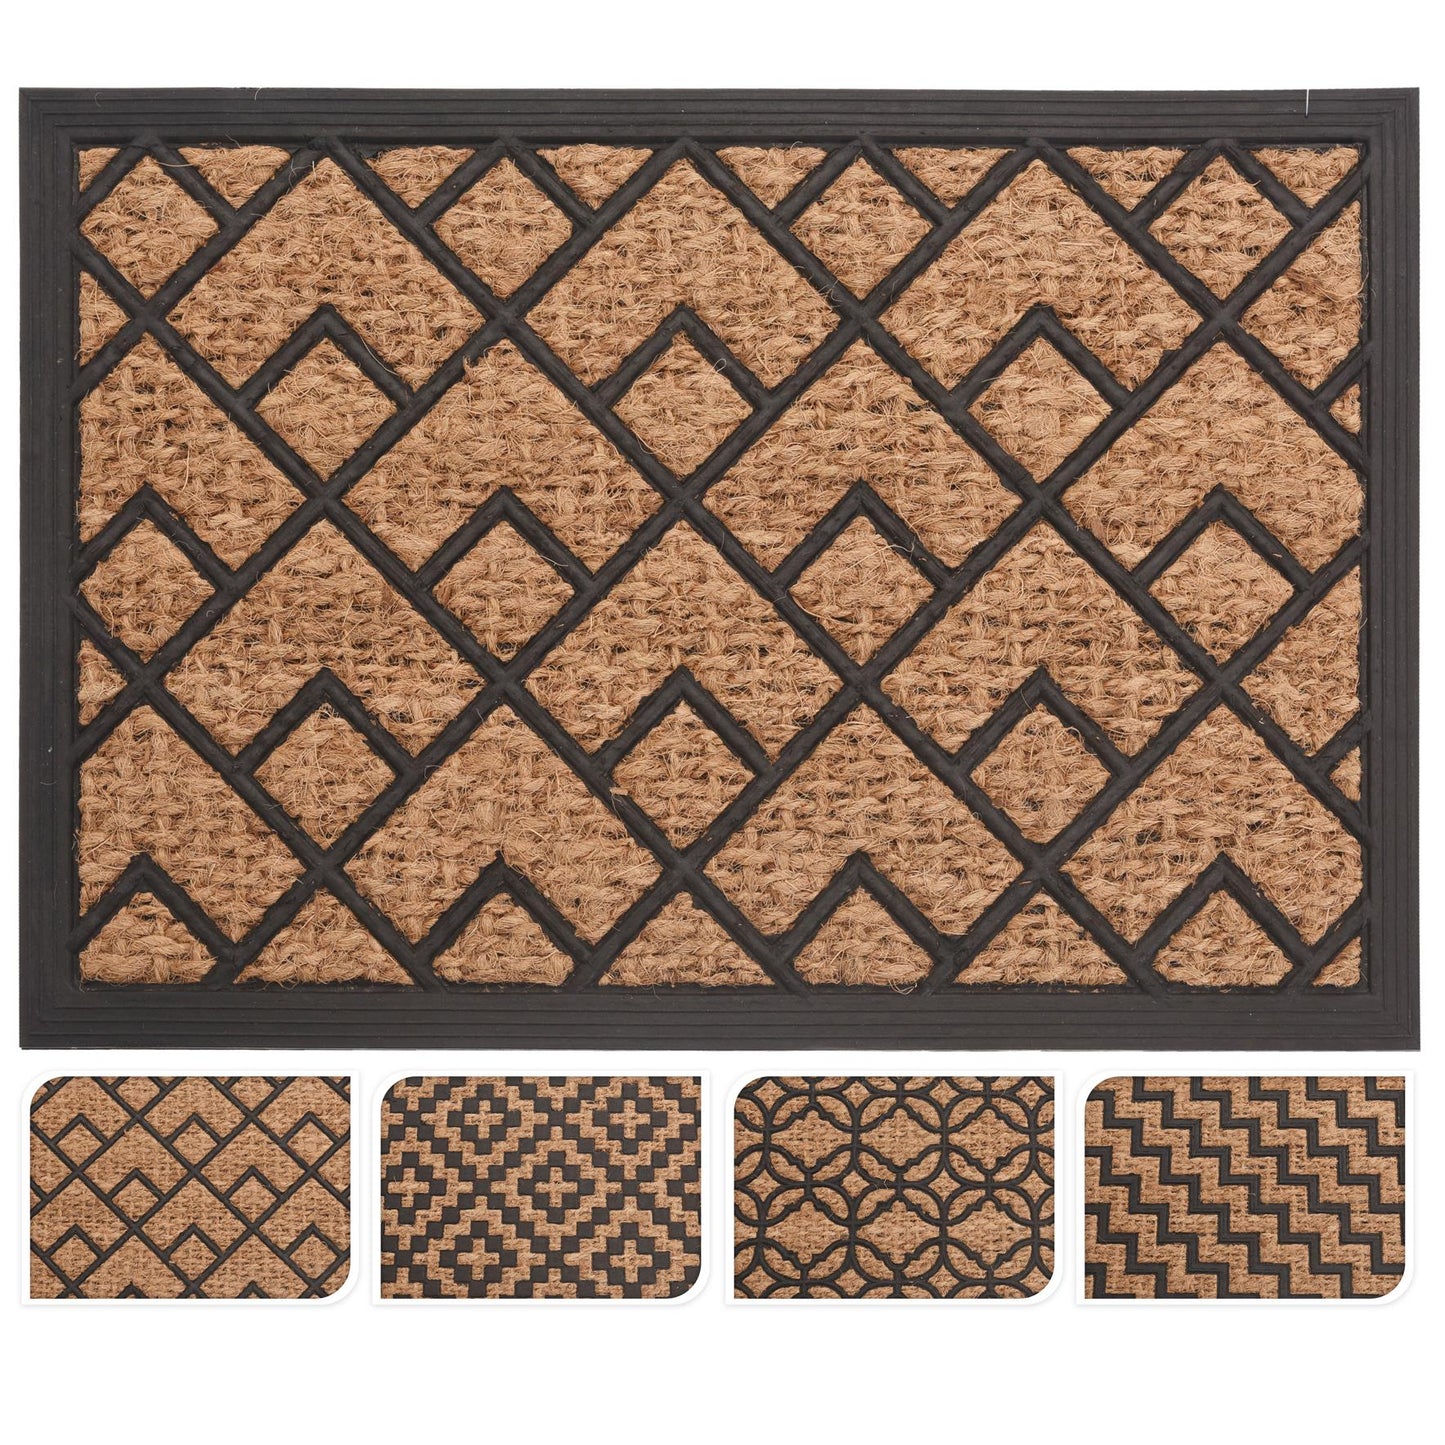 Rubber Geometric Design Coconut Fibre Coir Front Door Welcome Entrance Mat Natural Doormat 40x60cm ~ Design Varies